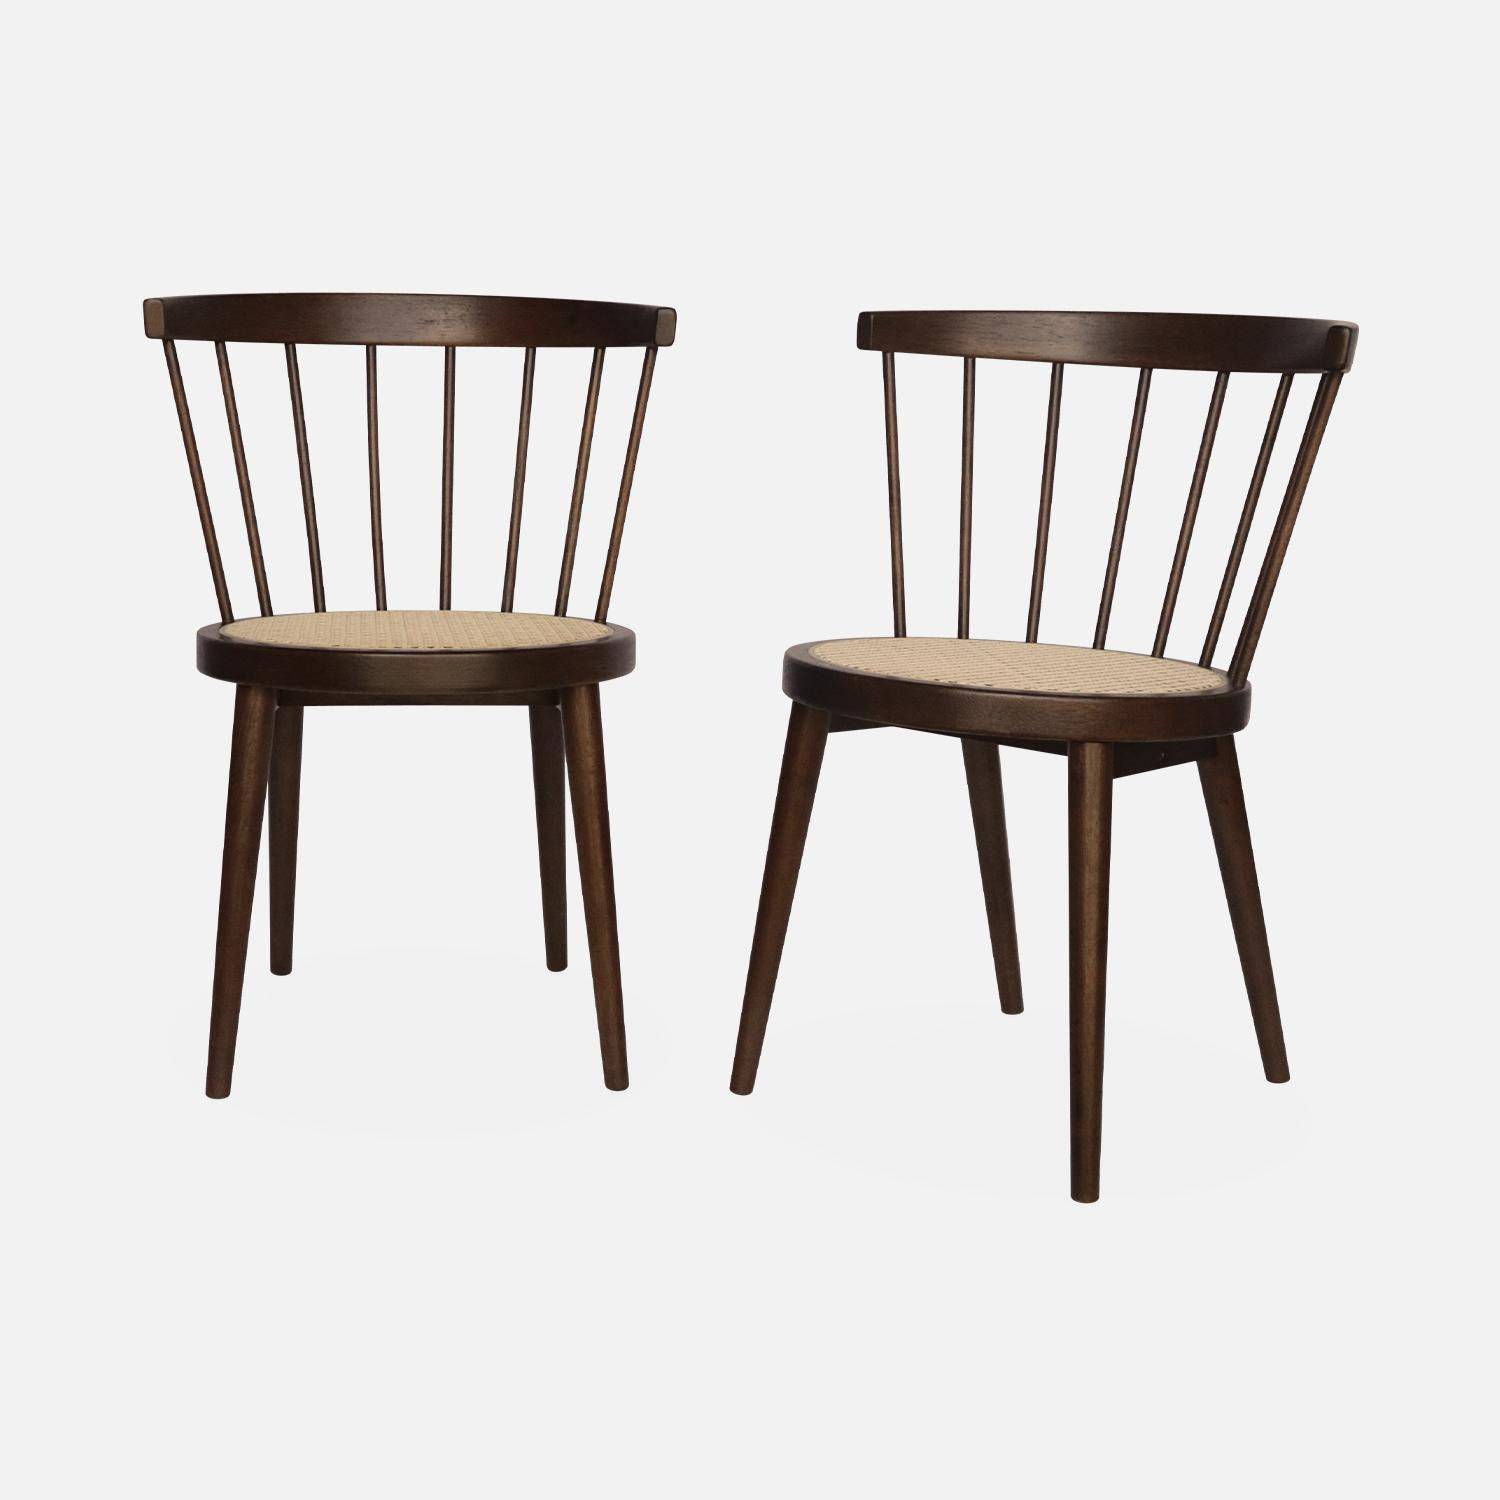 Pair of  Wood and Cane Chairs, Bohemian Spirit, Dark wood, L53 x W53.5 x H 6 cm Photo4